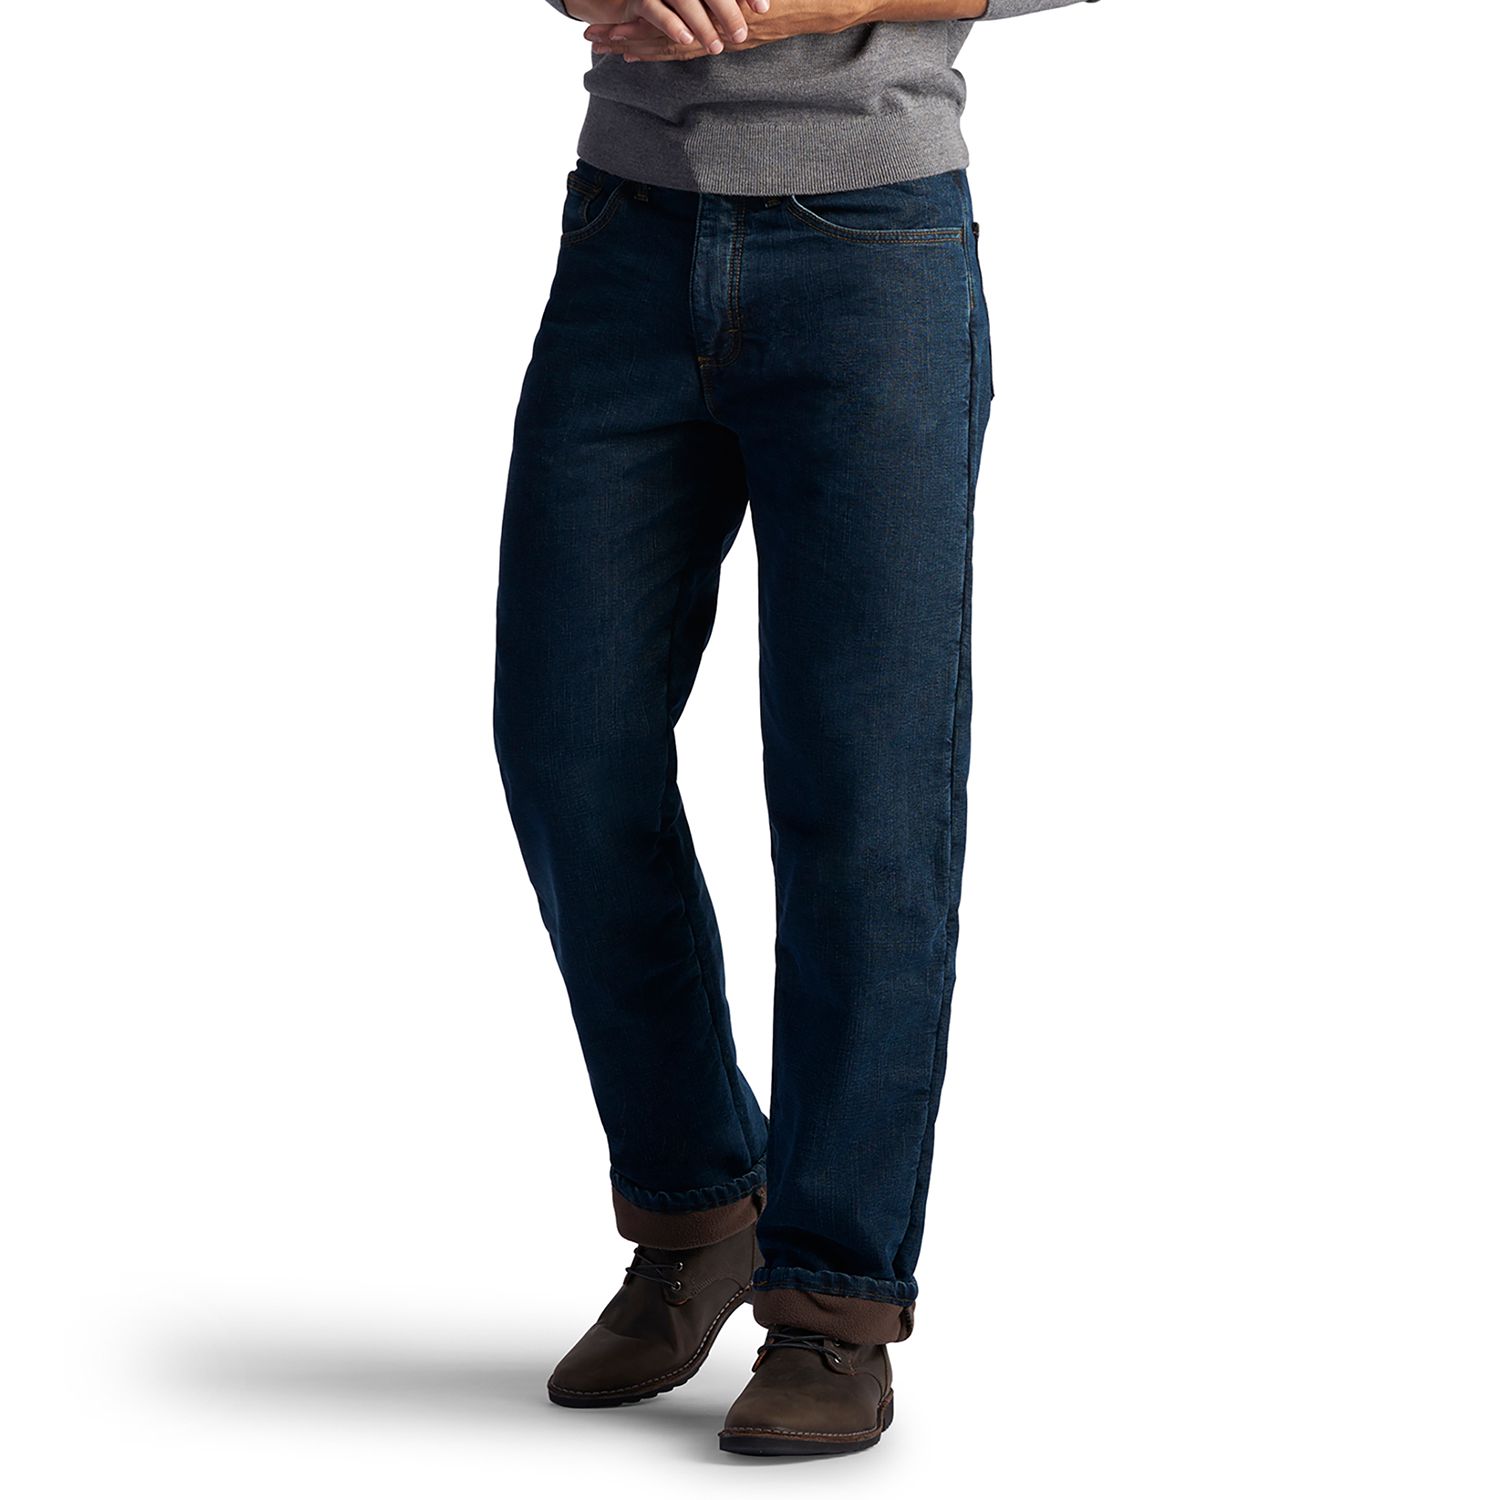 big men's flannel lined jeans